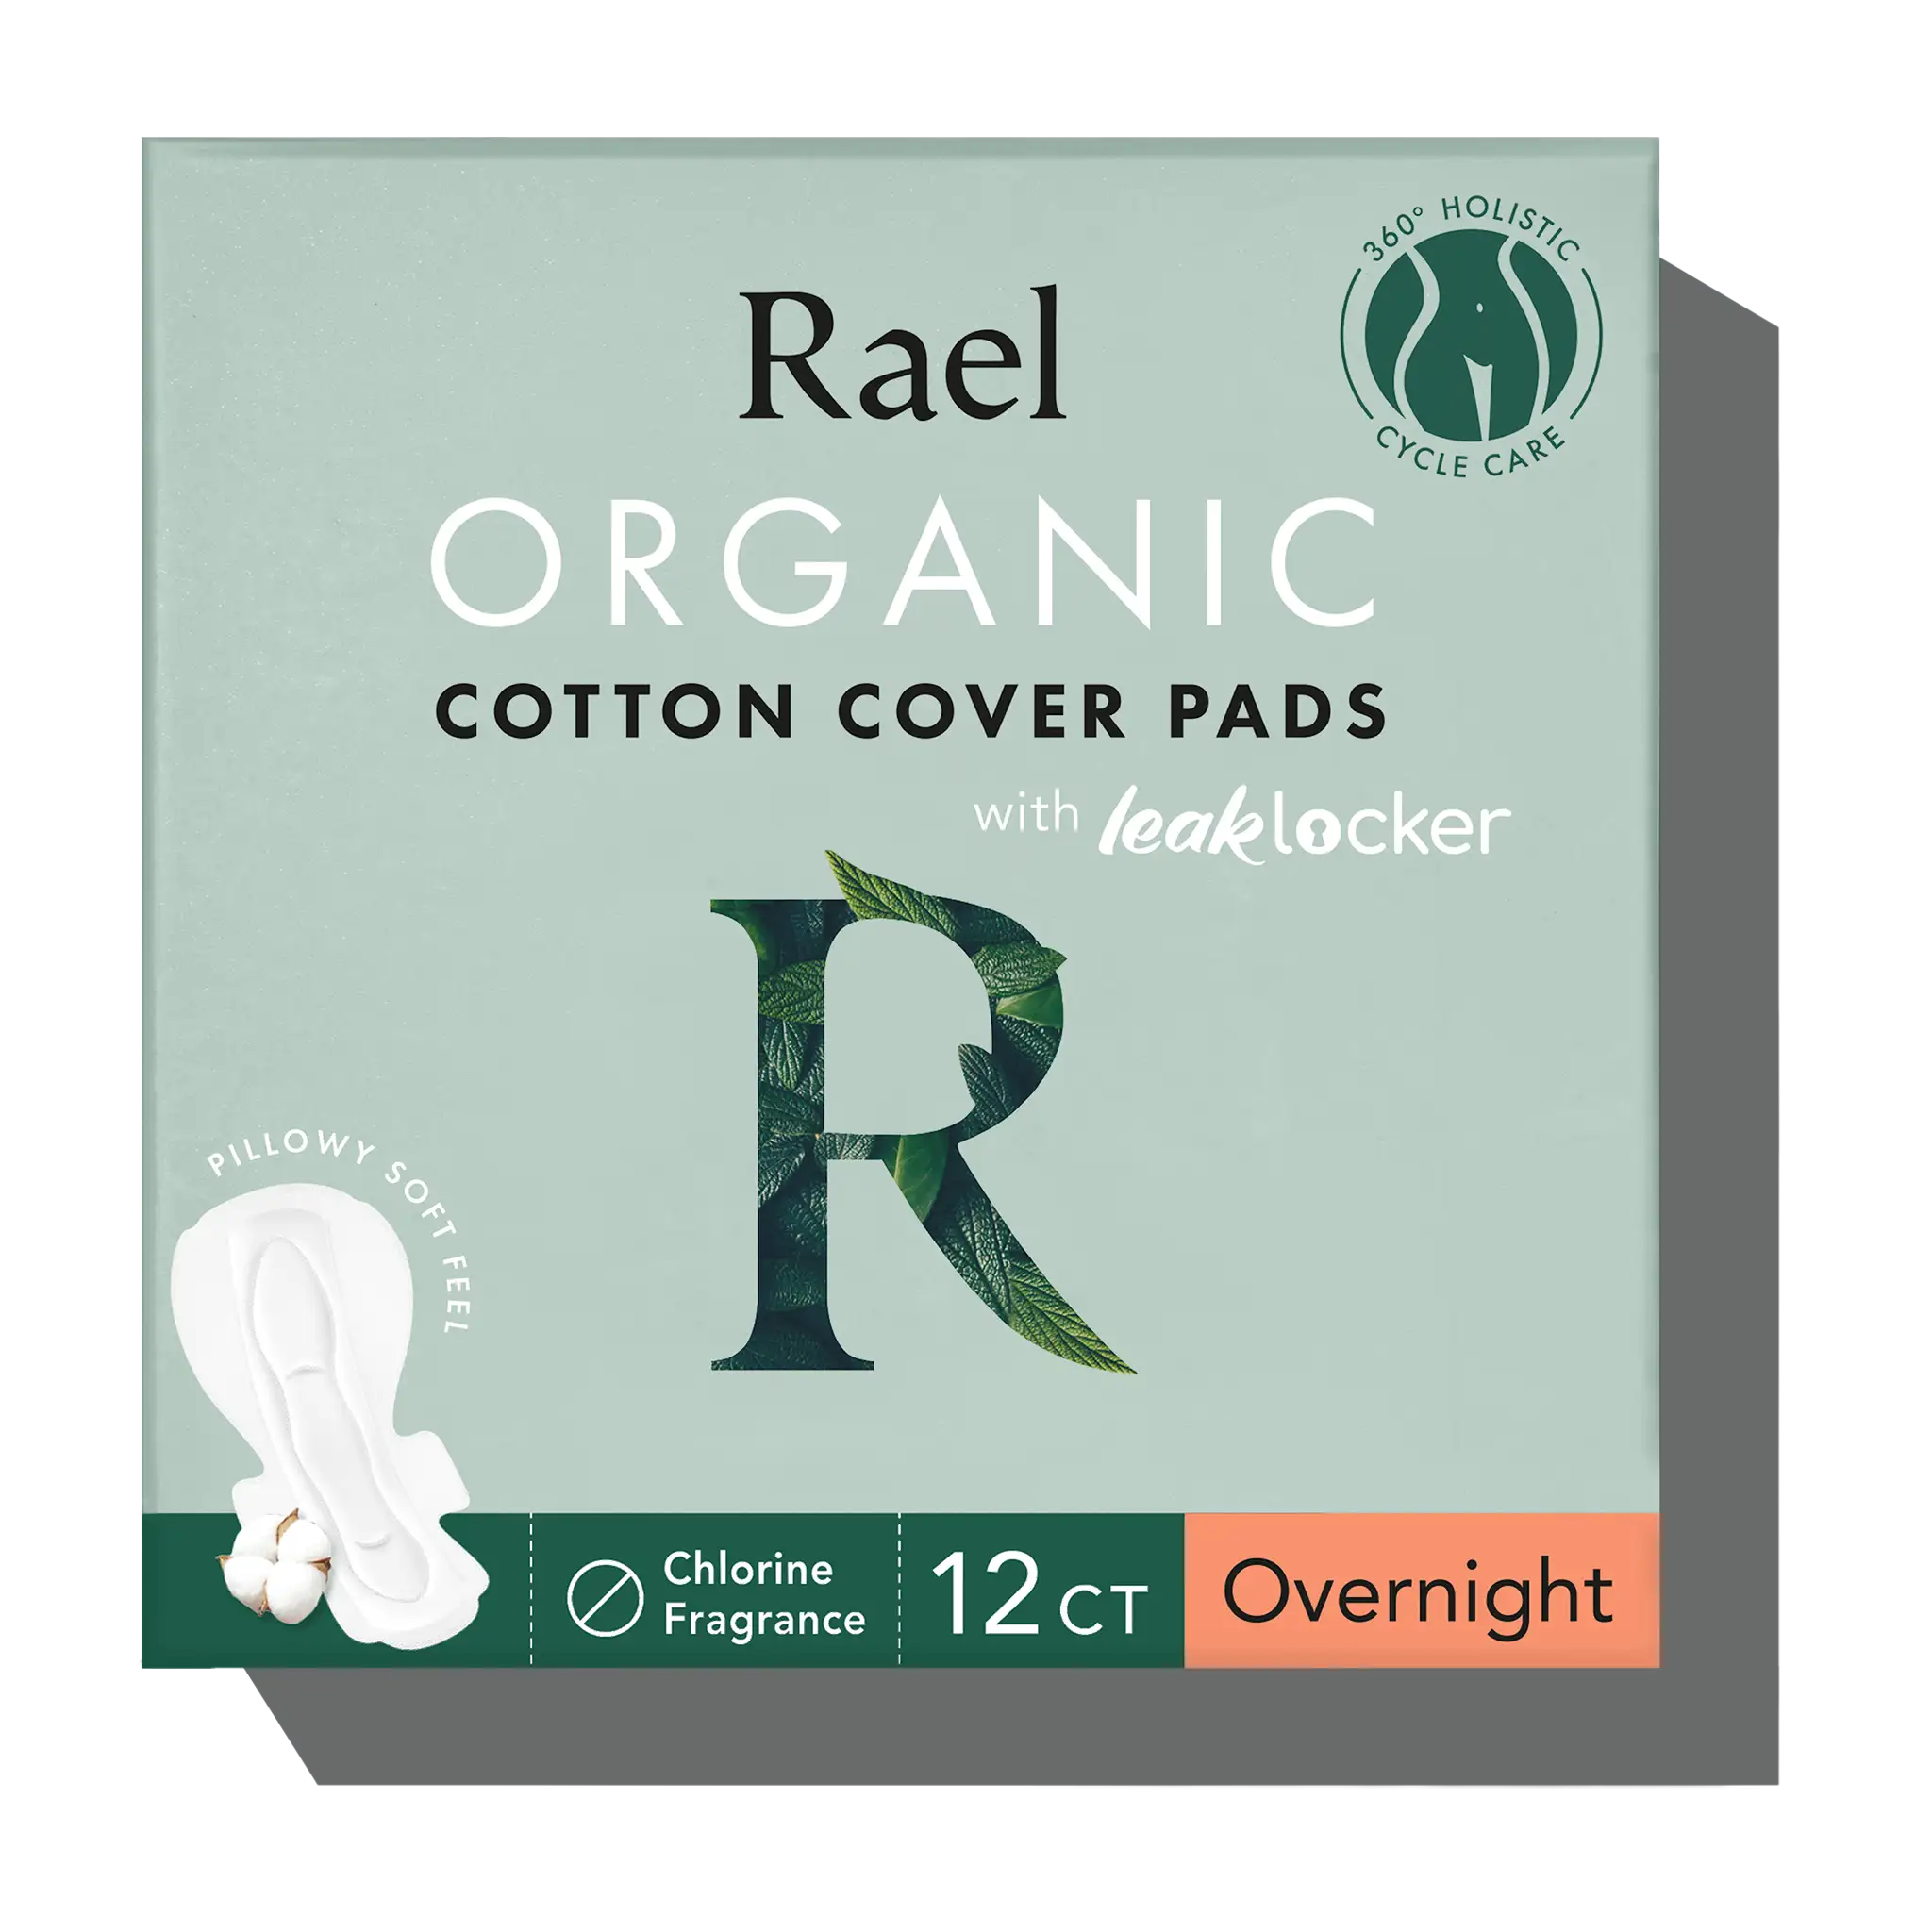 Rael Organic Cotton Overnight Period Underwear - Unscented - S/m - 10ct :  Target